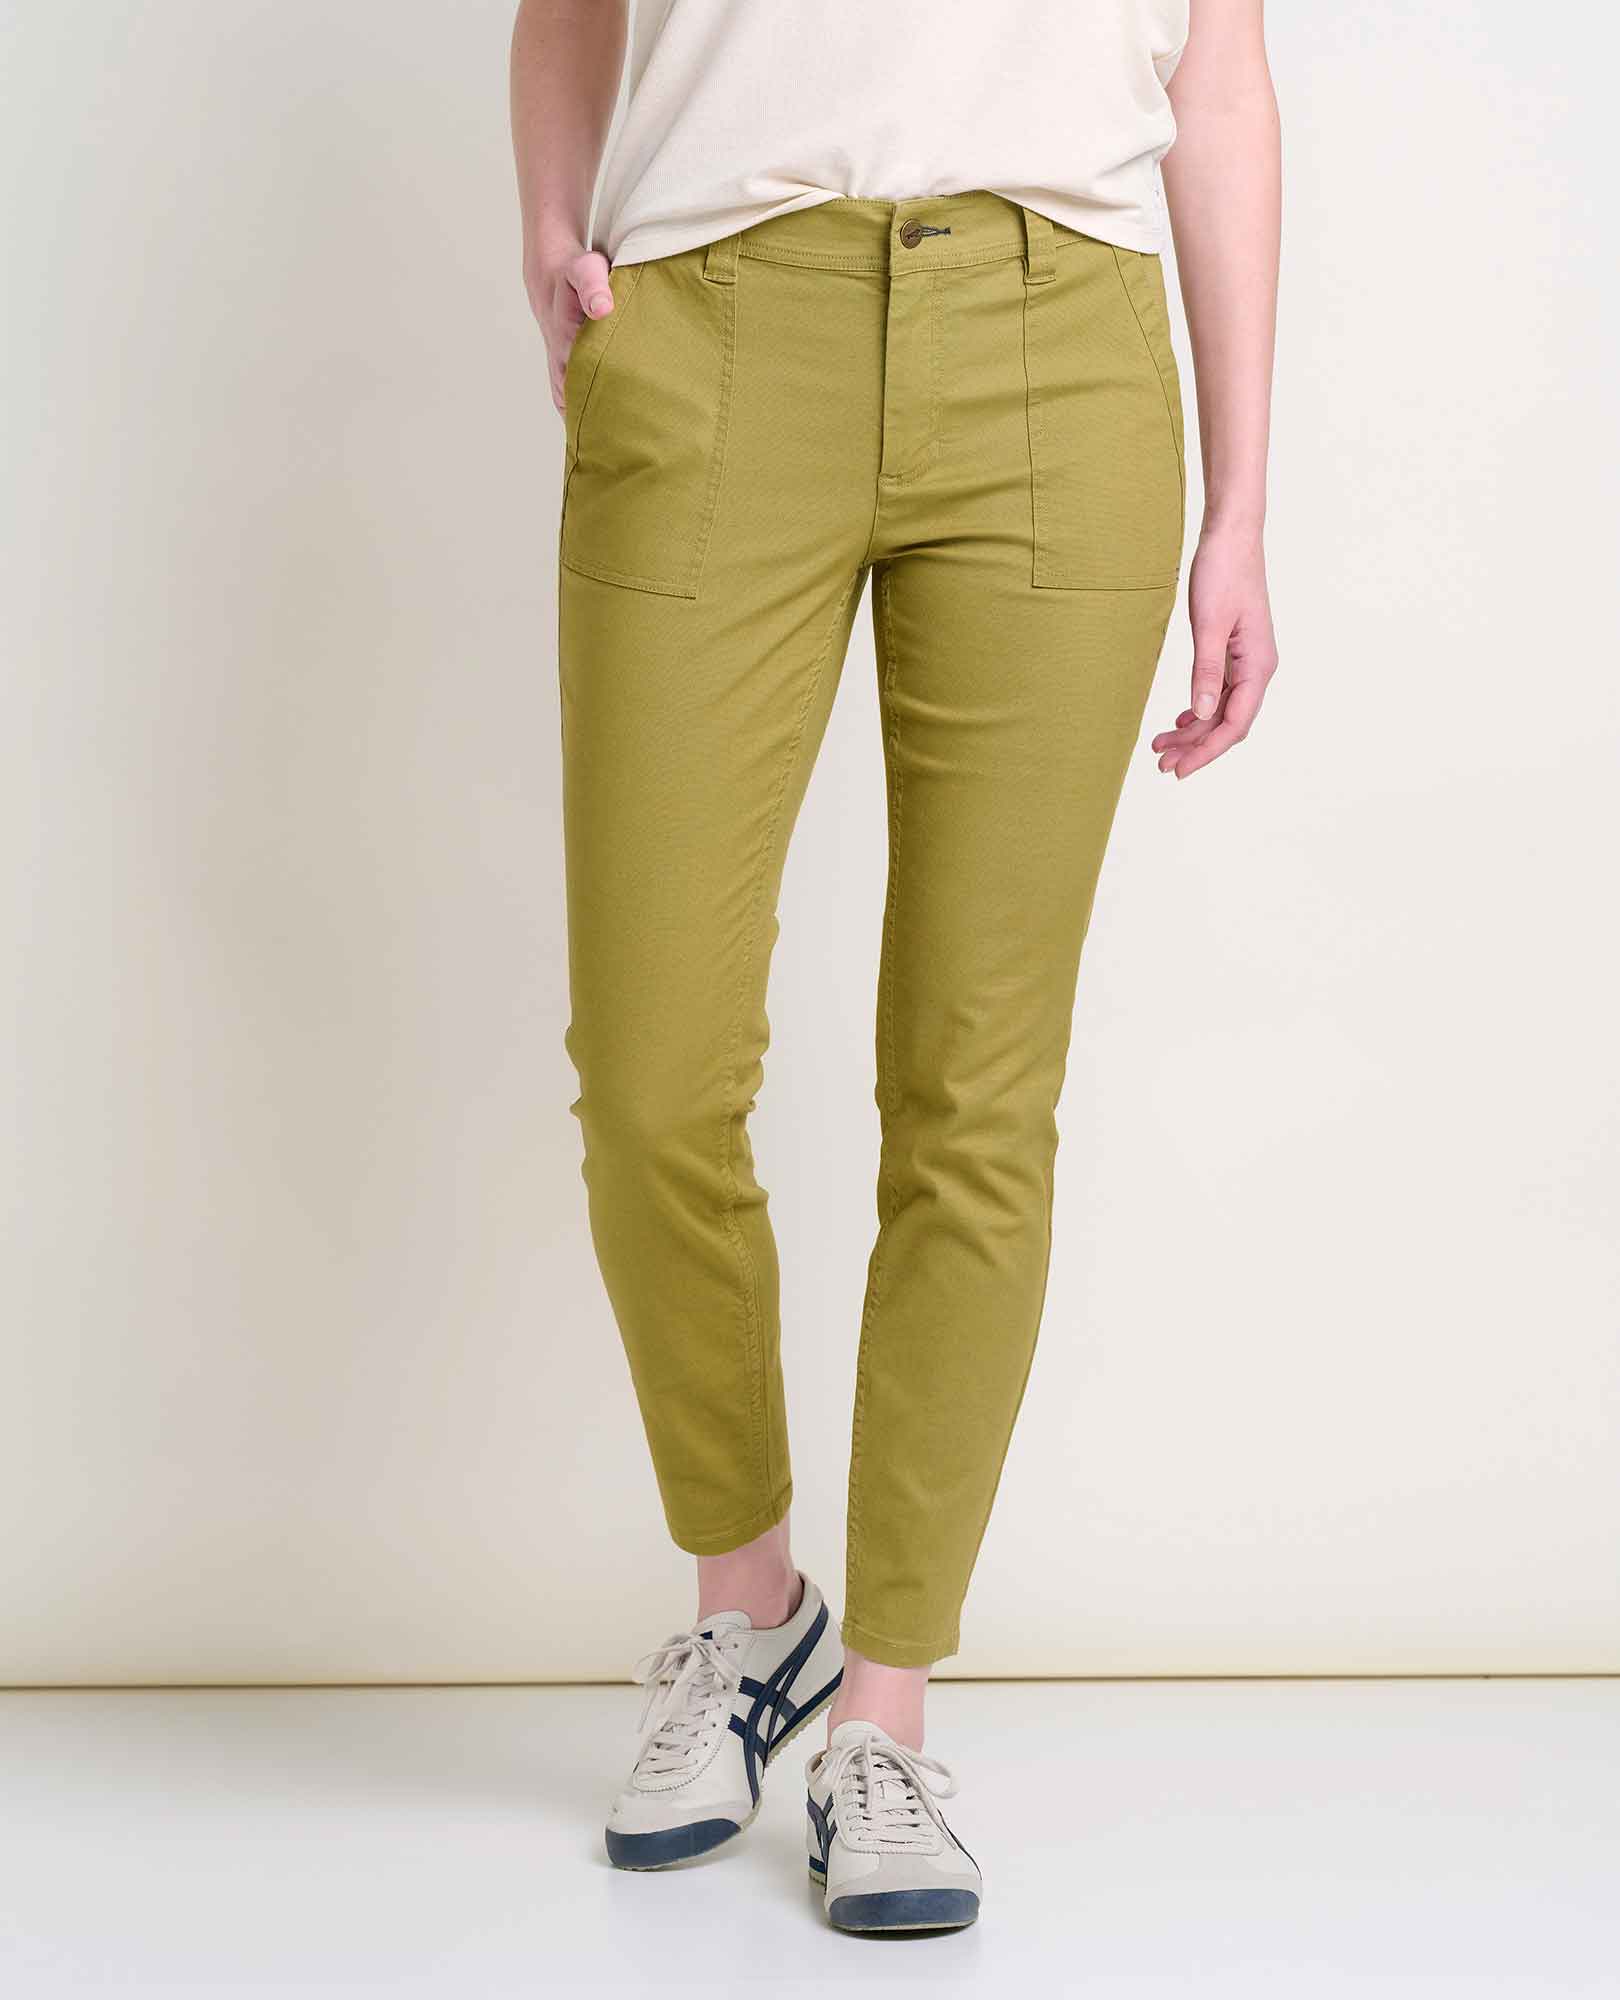 J.Crew Ladies Pants Straight Casual Dark Green Cotton Pocket Button Zip  Size 2S